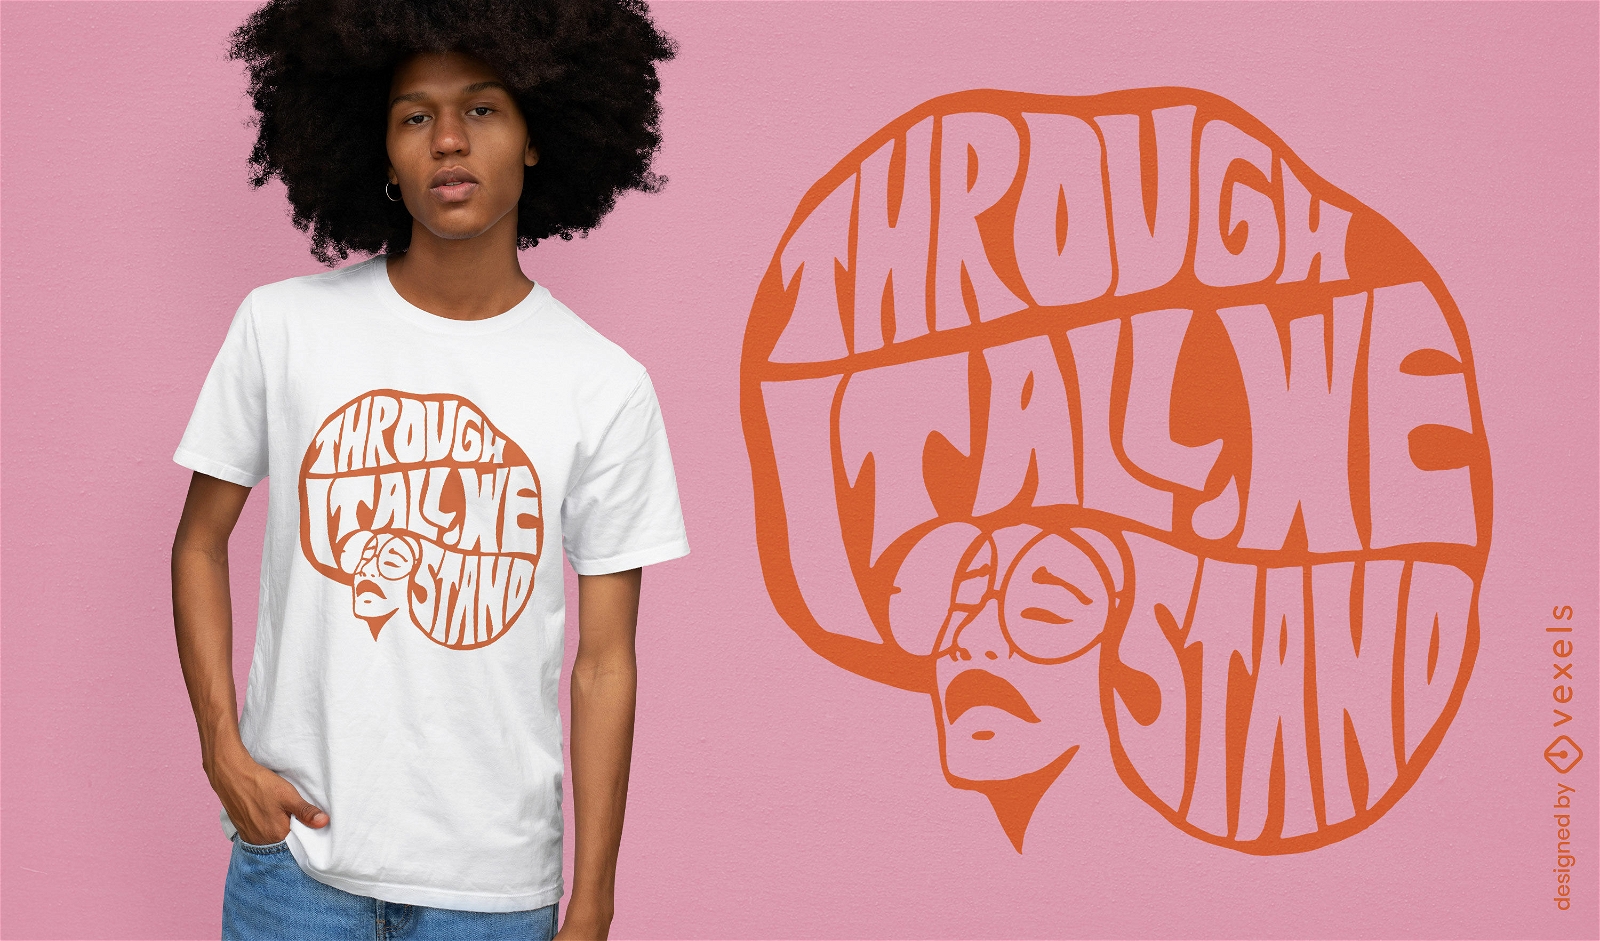 We stand black history t-shirt design